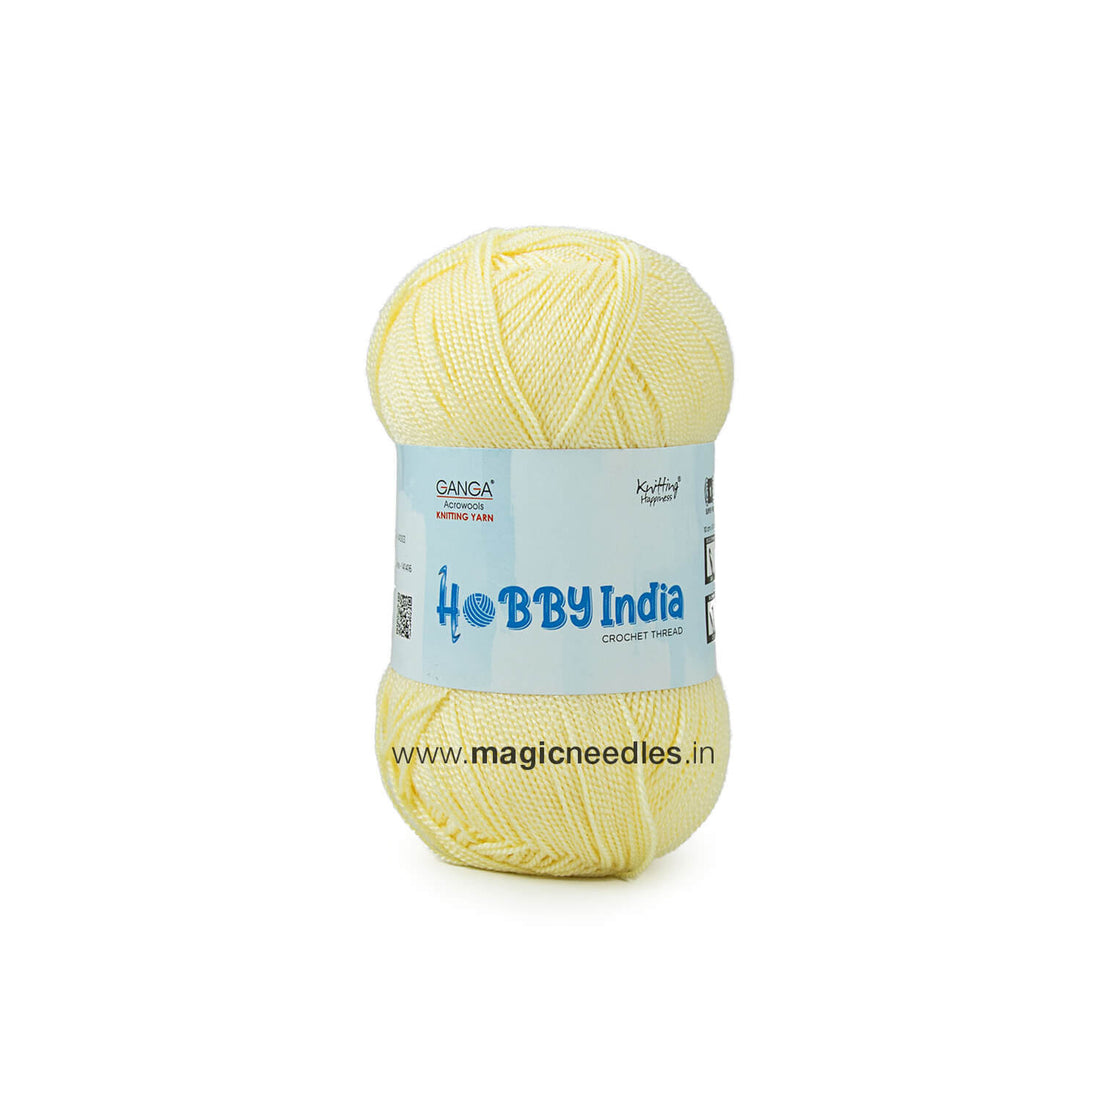 Ganga Hobby India Crochet Thread - Cream 82